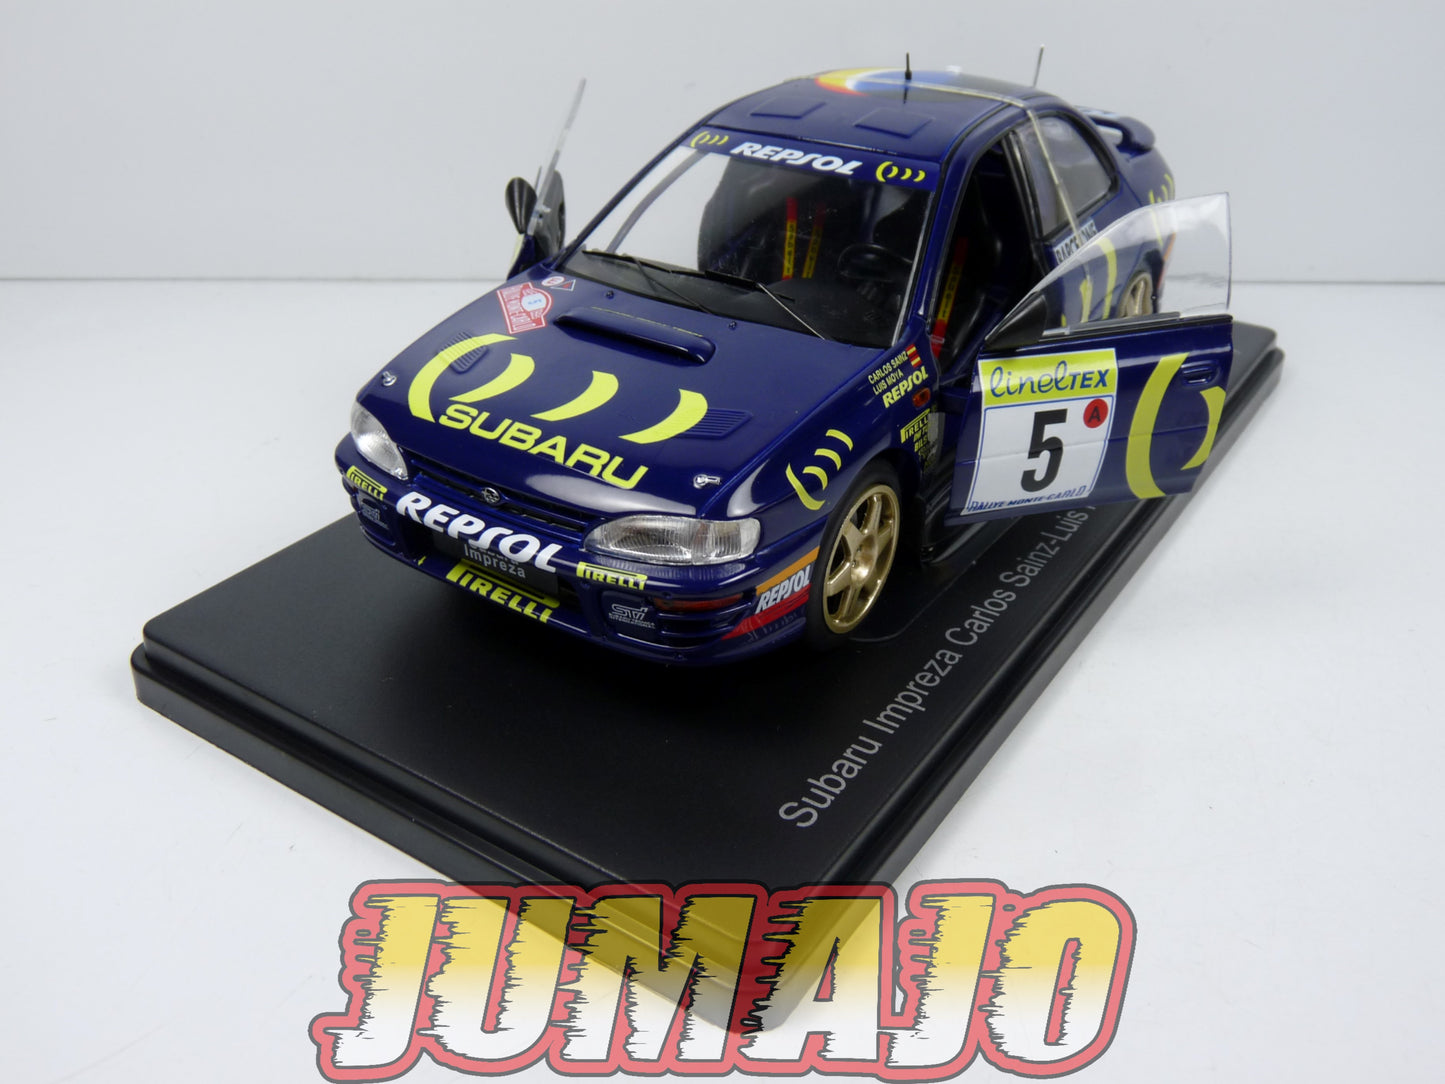 VQJ182 Voiture 1/24 Hachette Japon SUBARU Impreza Carlos Rallye Monte Carlo 1995 #5